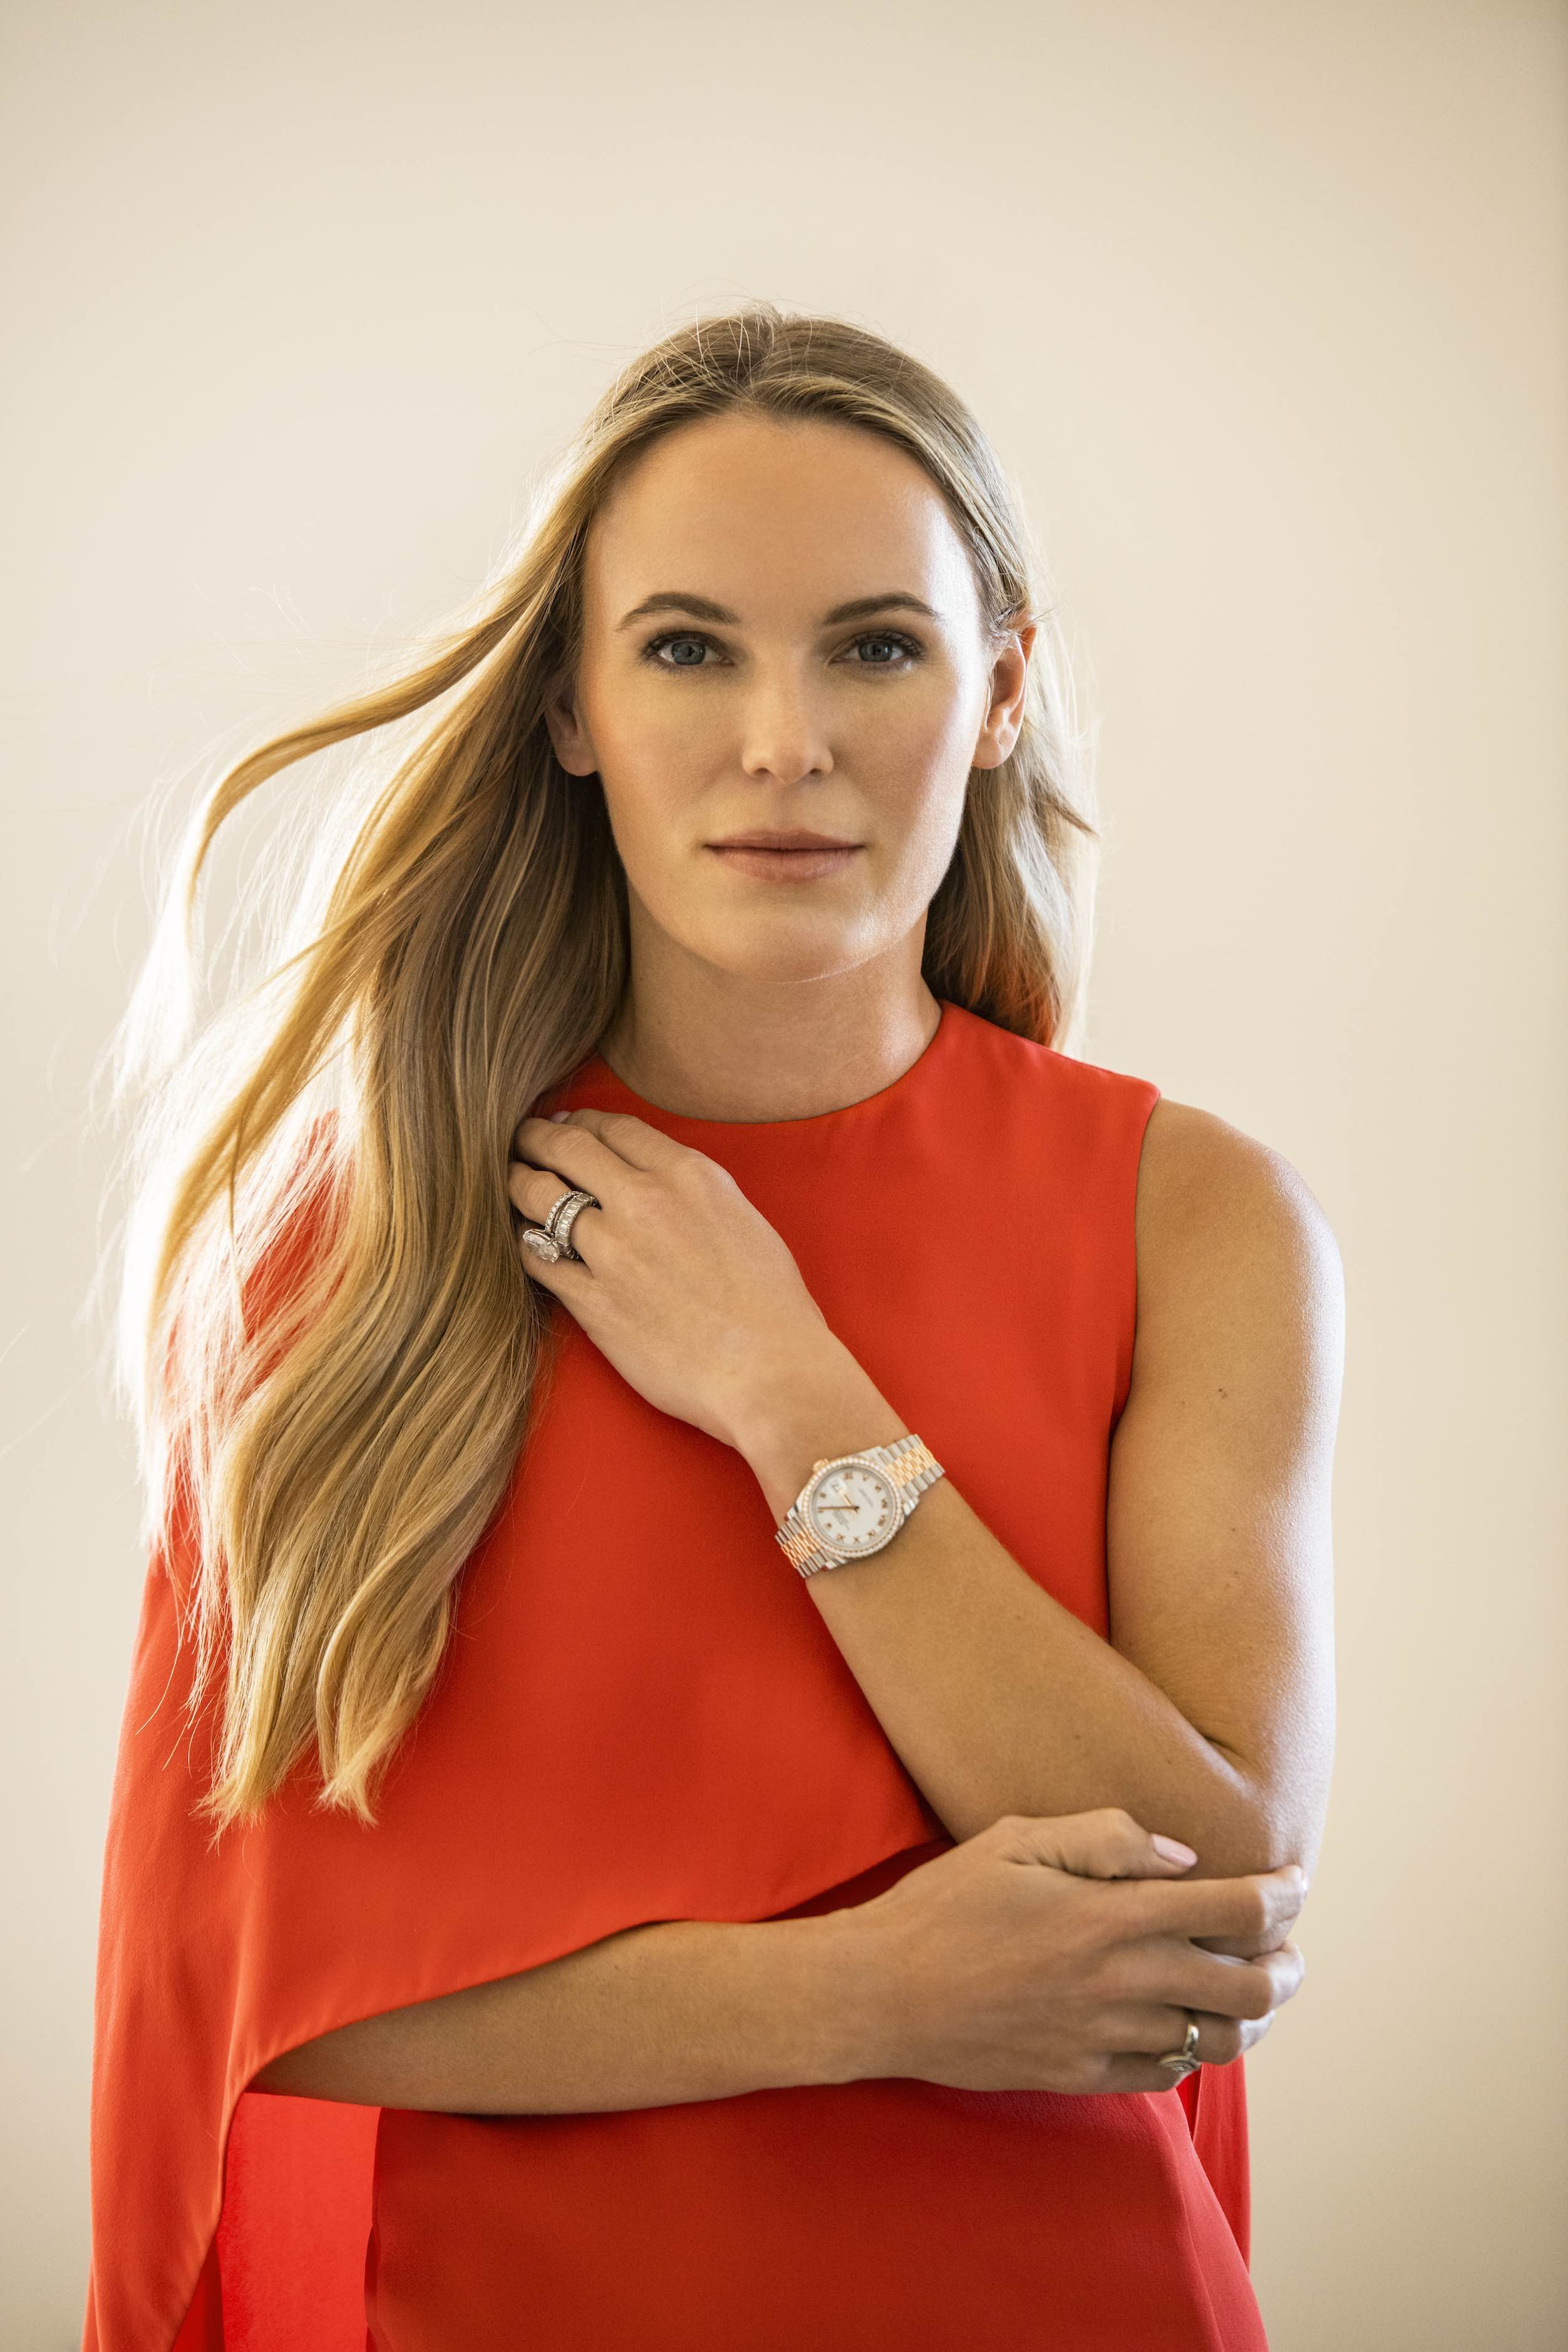 Rolex Testimonee Caroline Wozniacki Shares Her Personal Timepiece Collection